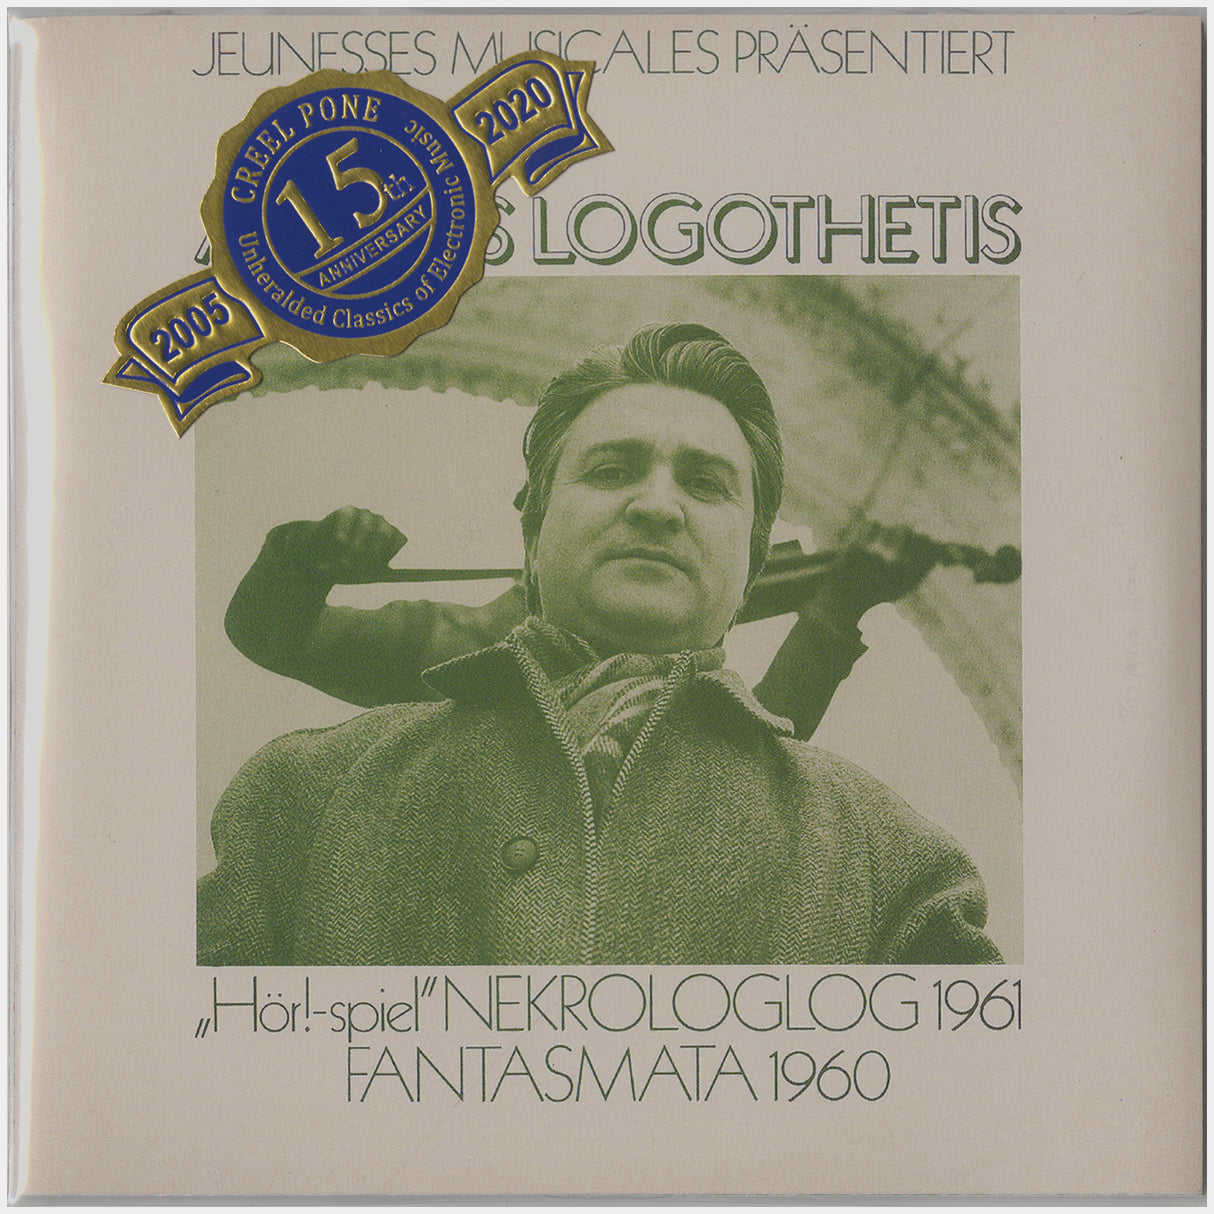 [CP 037 CD] Anestis Logothetis; „Hör!-Spiel”, Nekrologlog 1961, Fantasmata 1960, Wellenformen, Anastasis, Styx